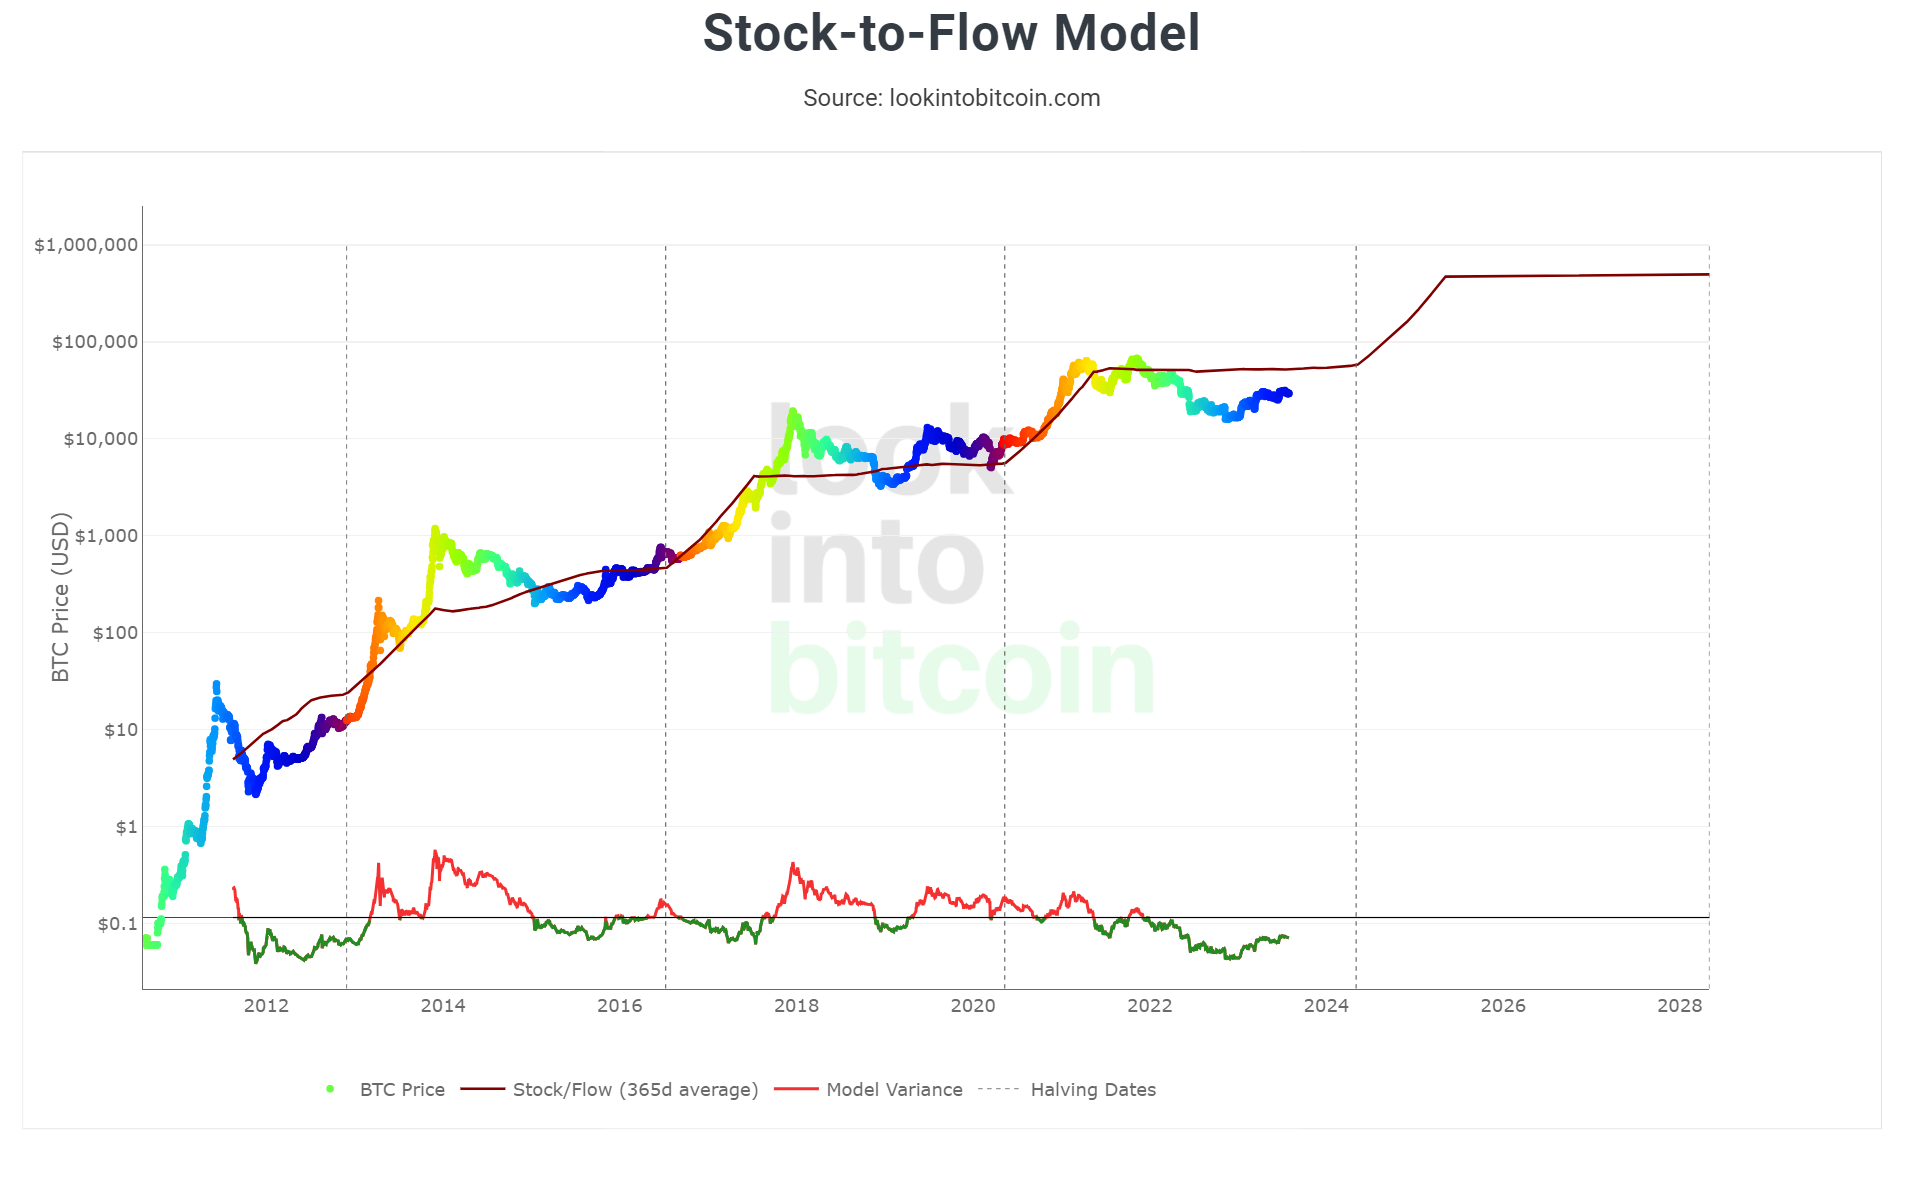 Stock-to-Flow (S2F) Ratio: How It Influences Bitcoin Prices